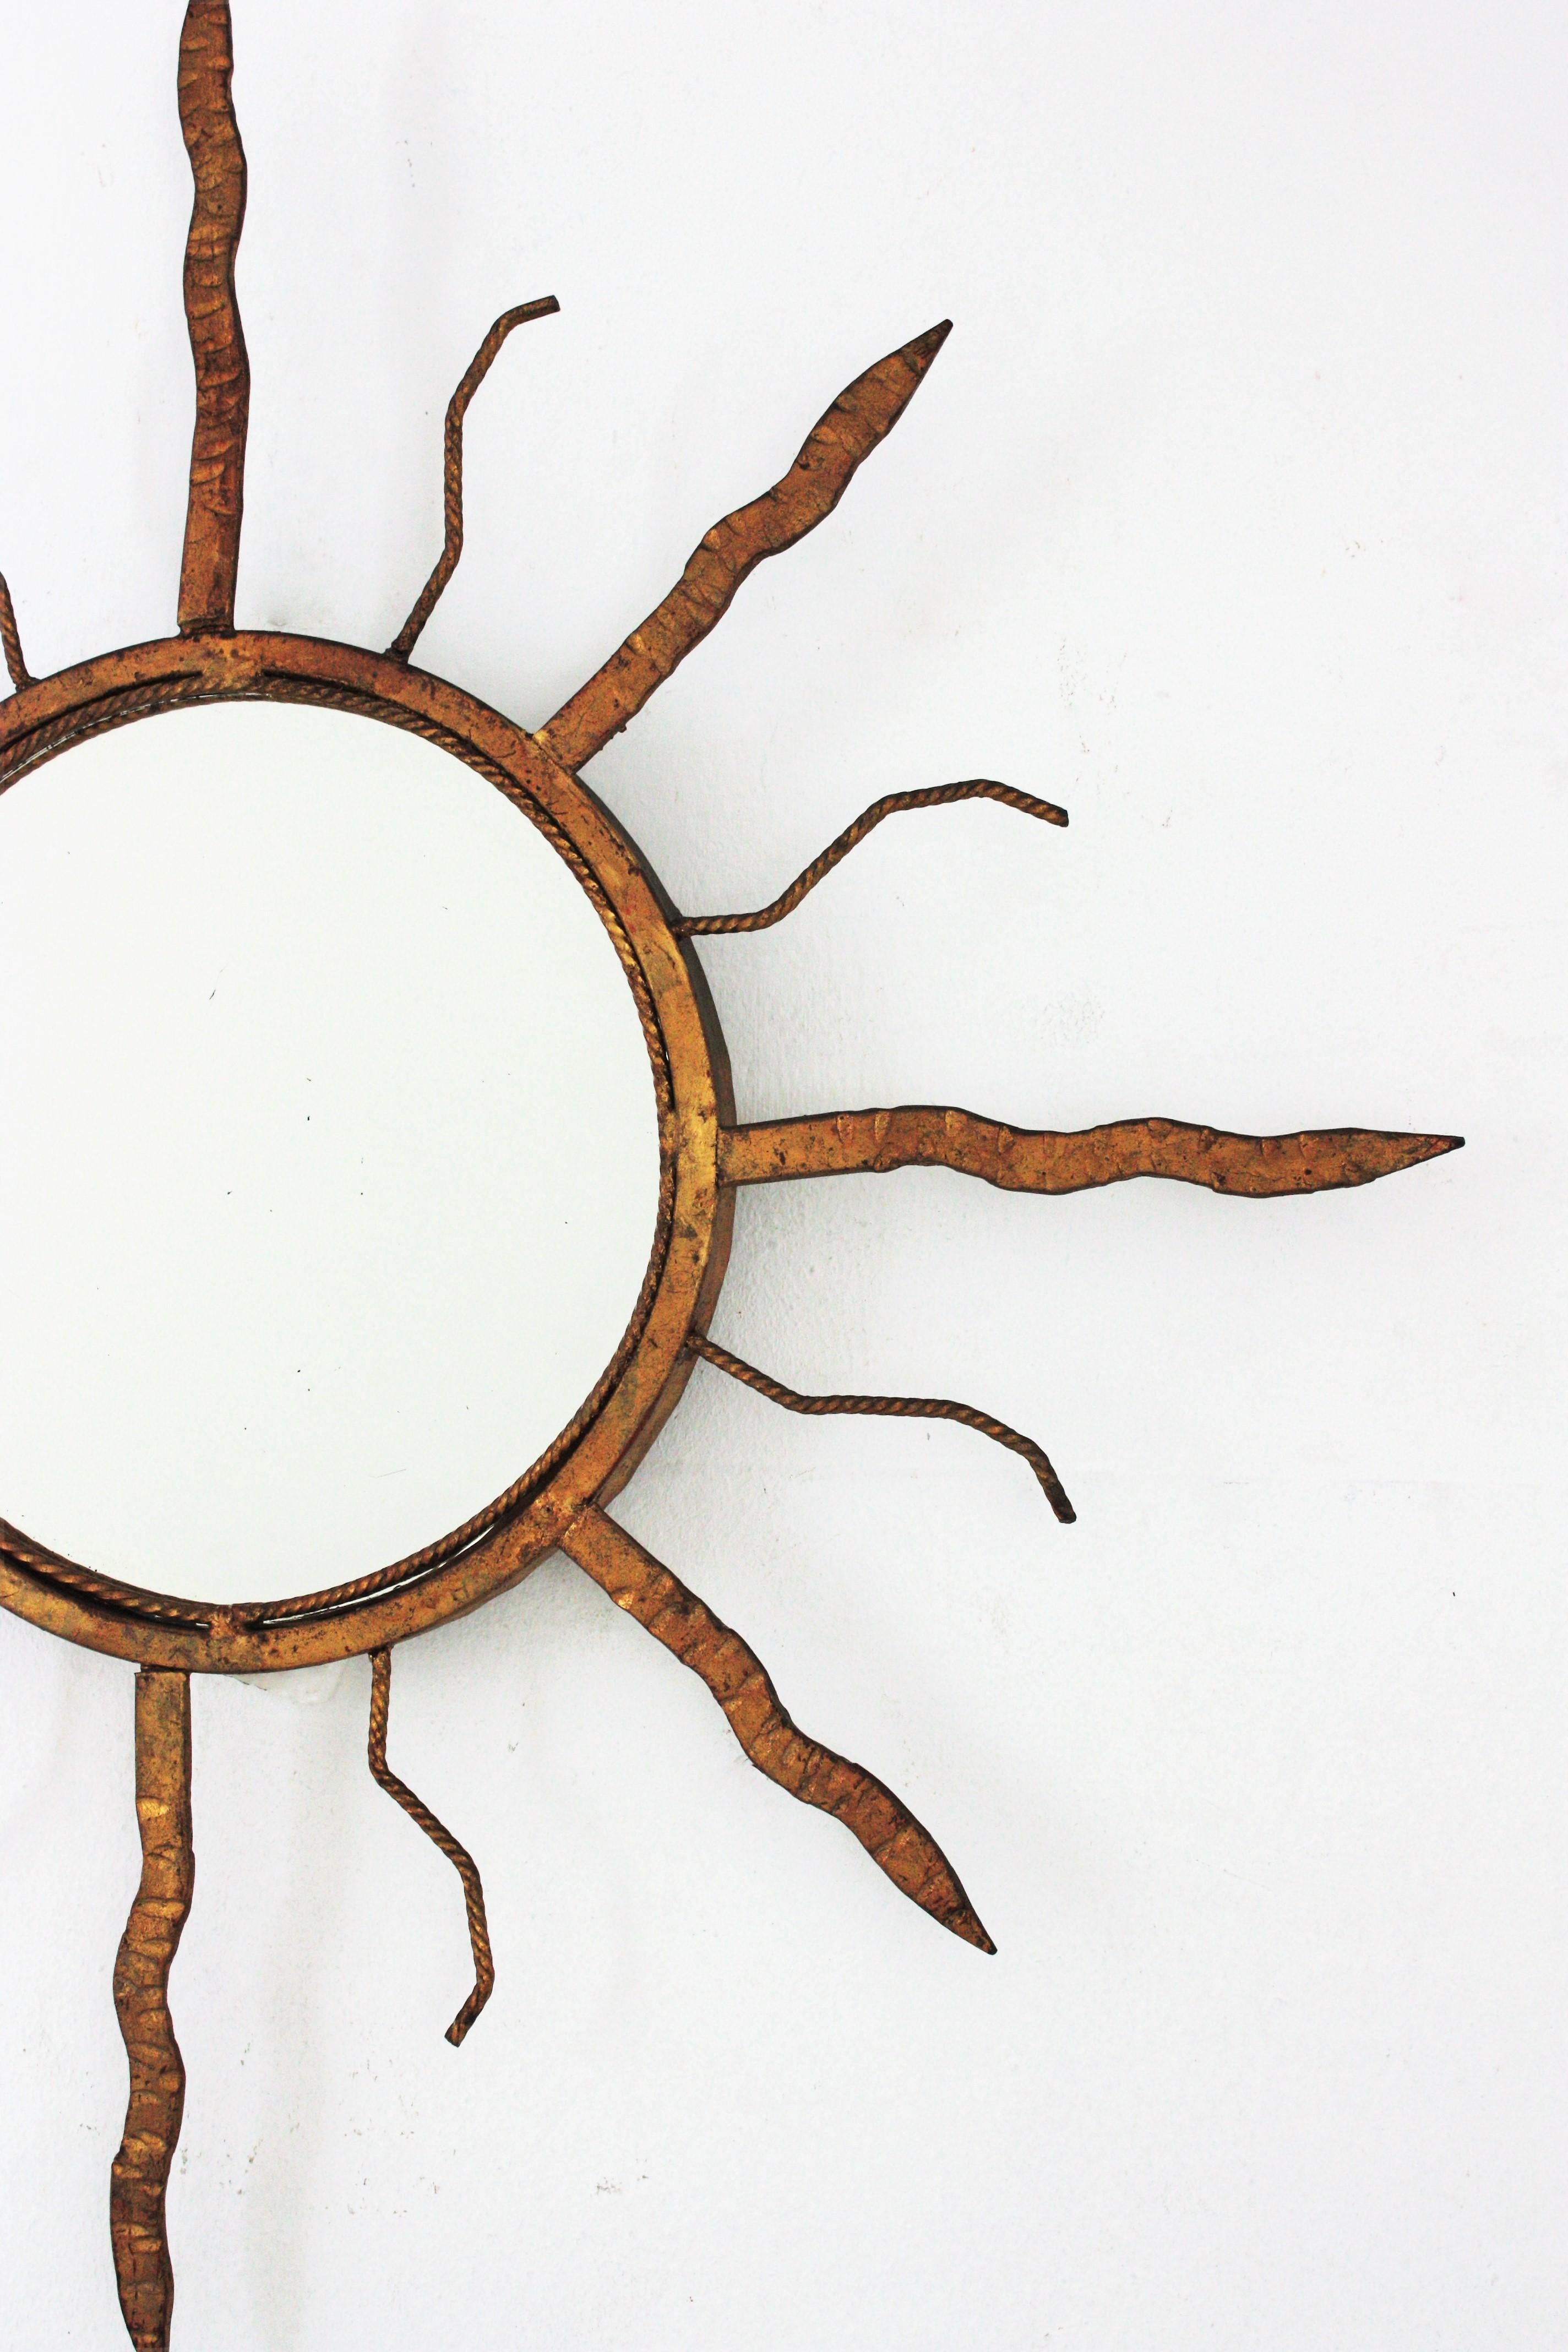 French Sunburst Mirror in Gilt Iron in the Style of Poillerat